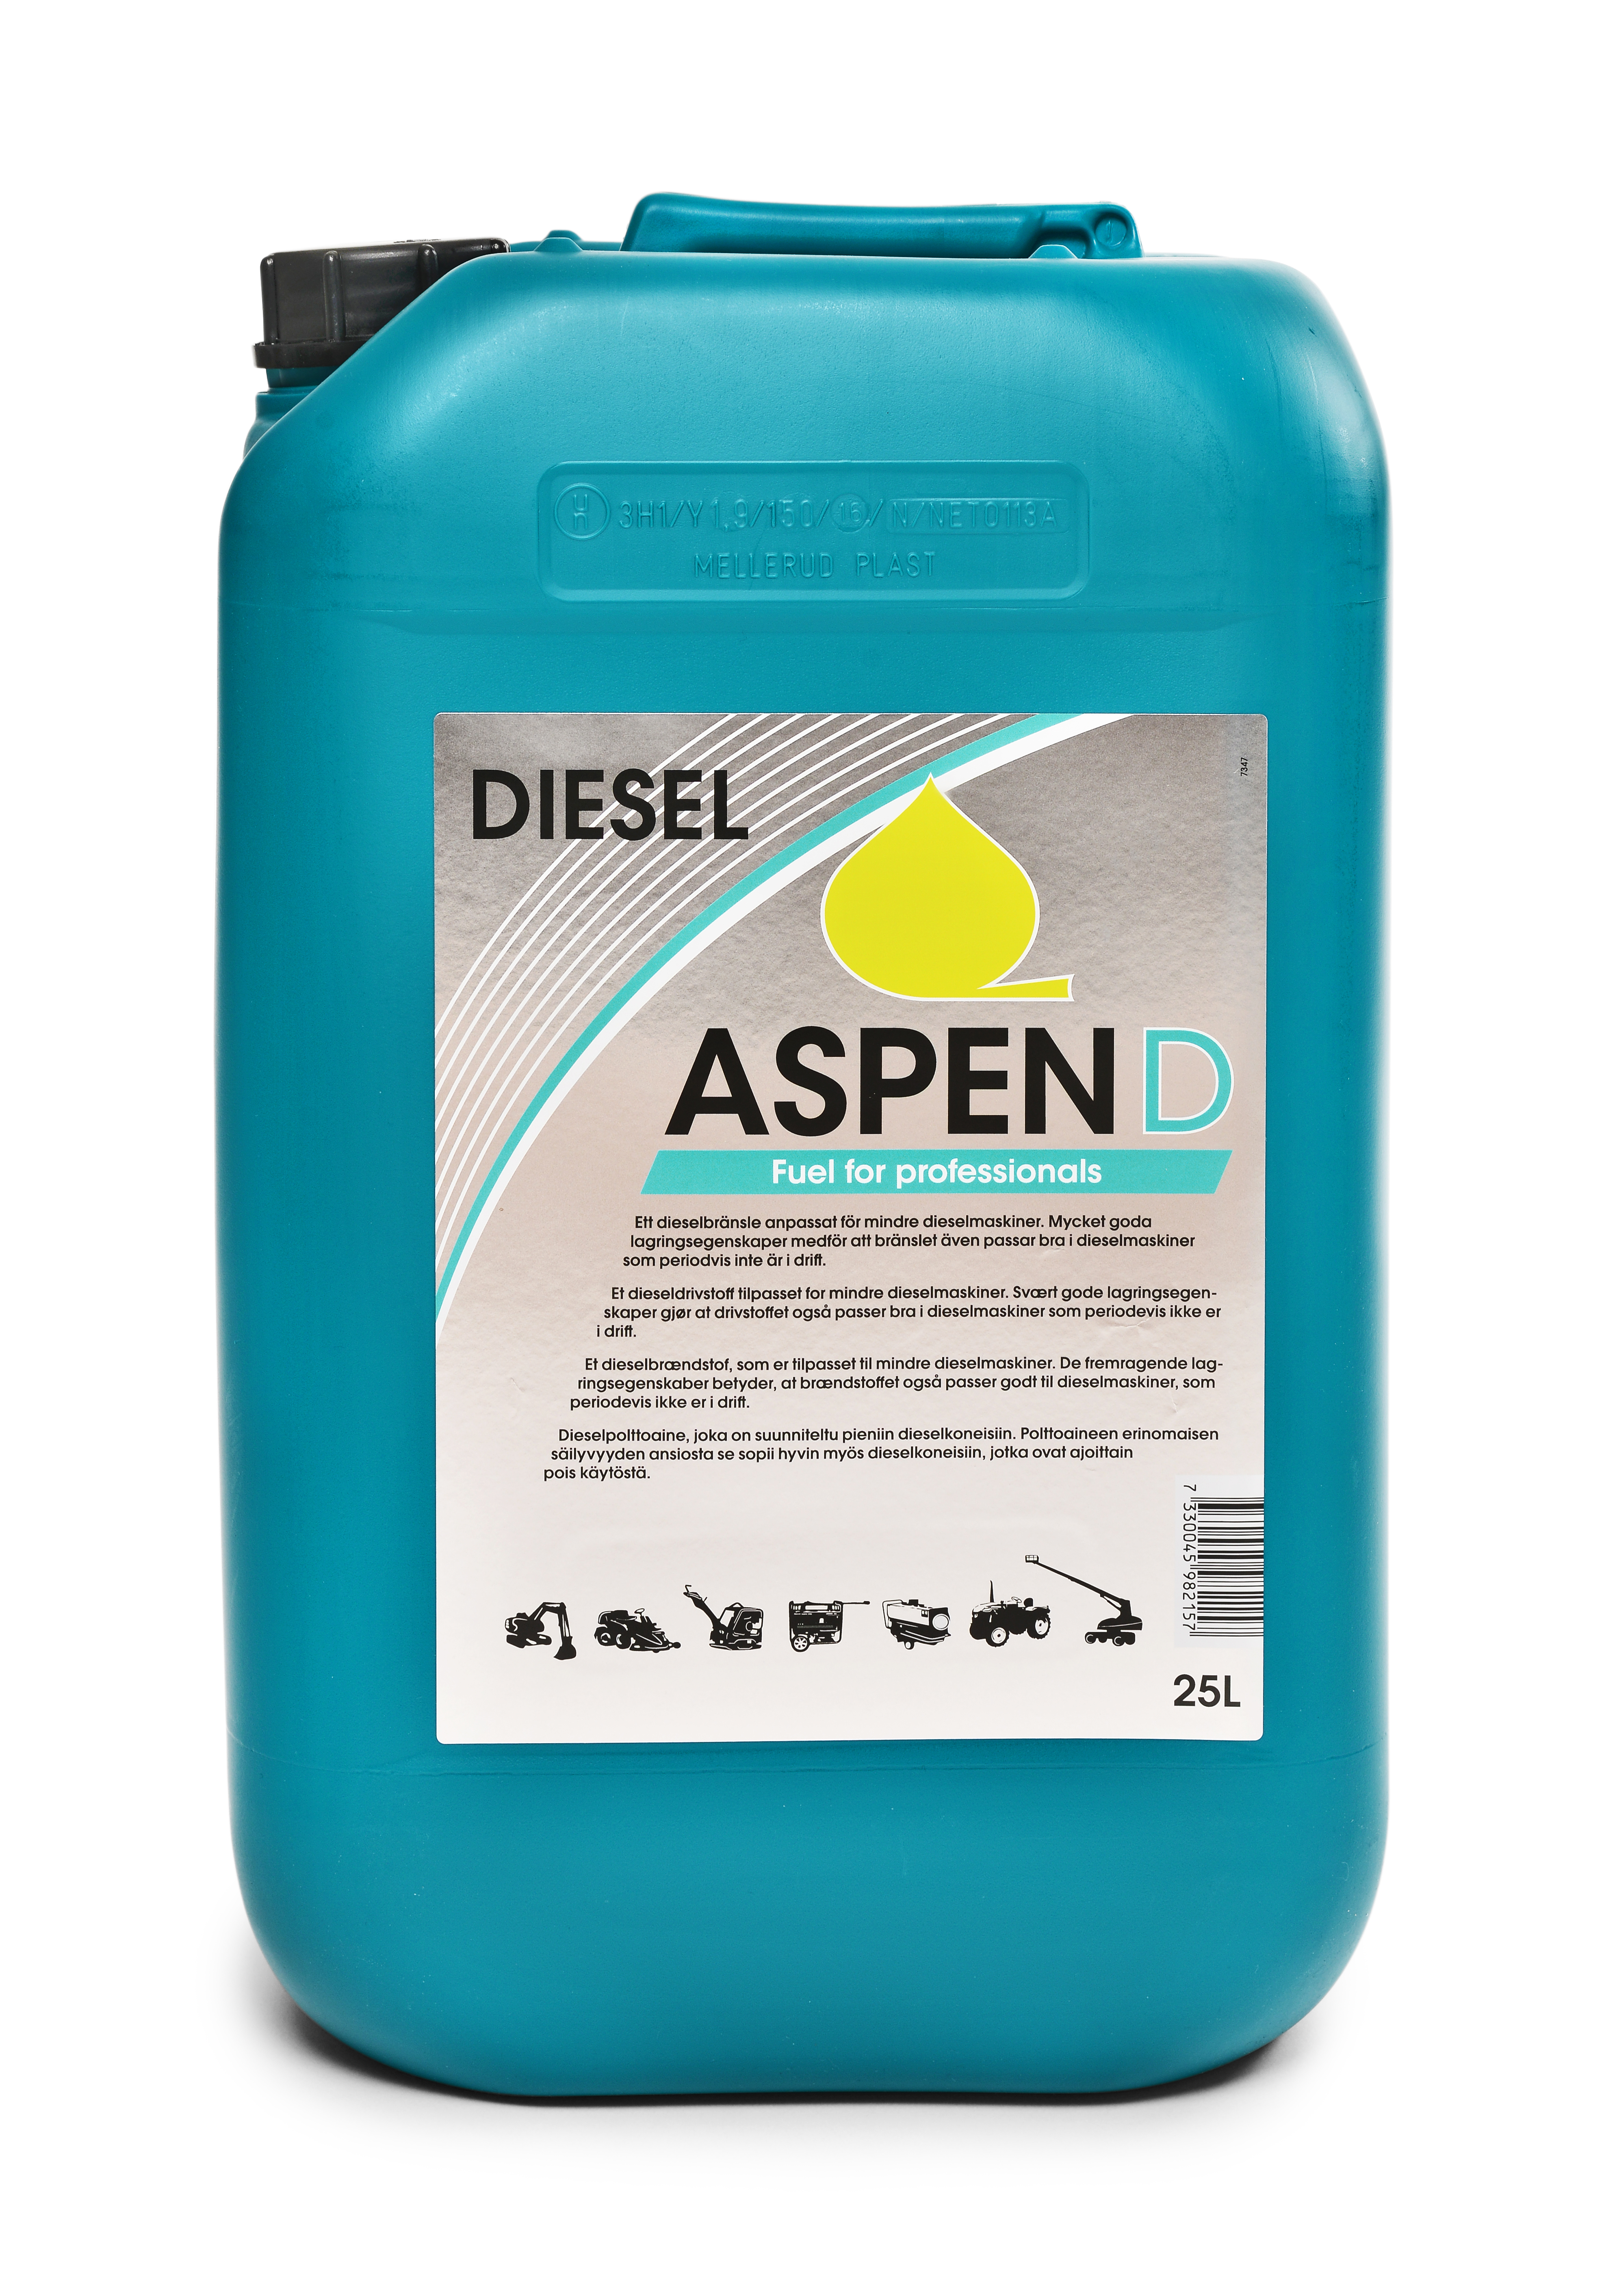 Diesel Aspen D 25 lit